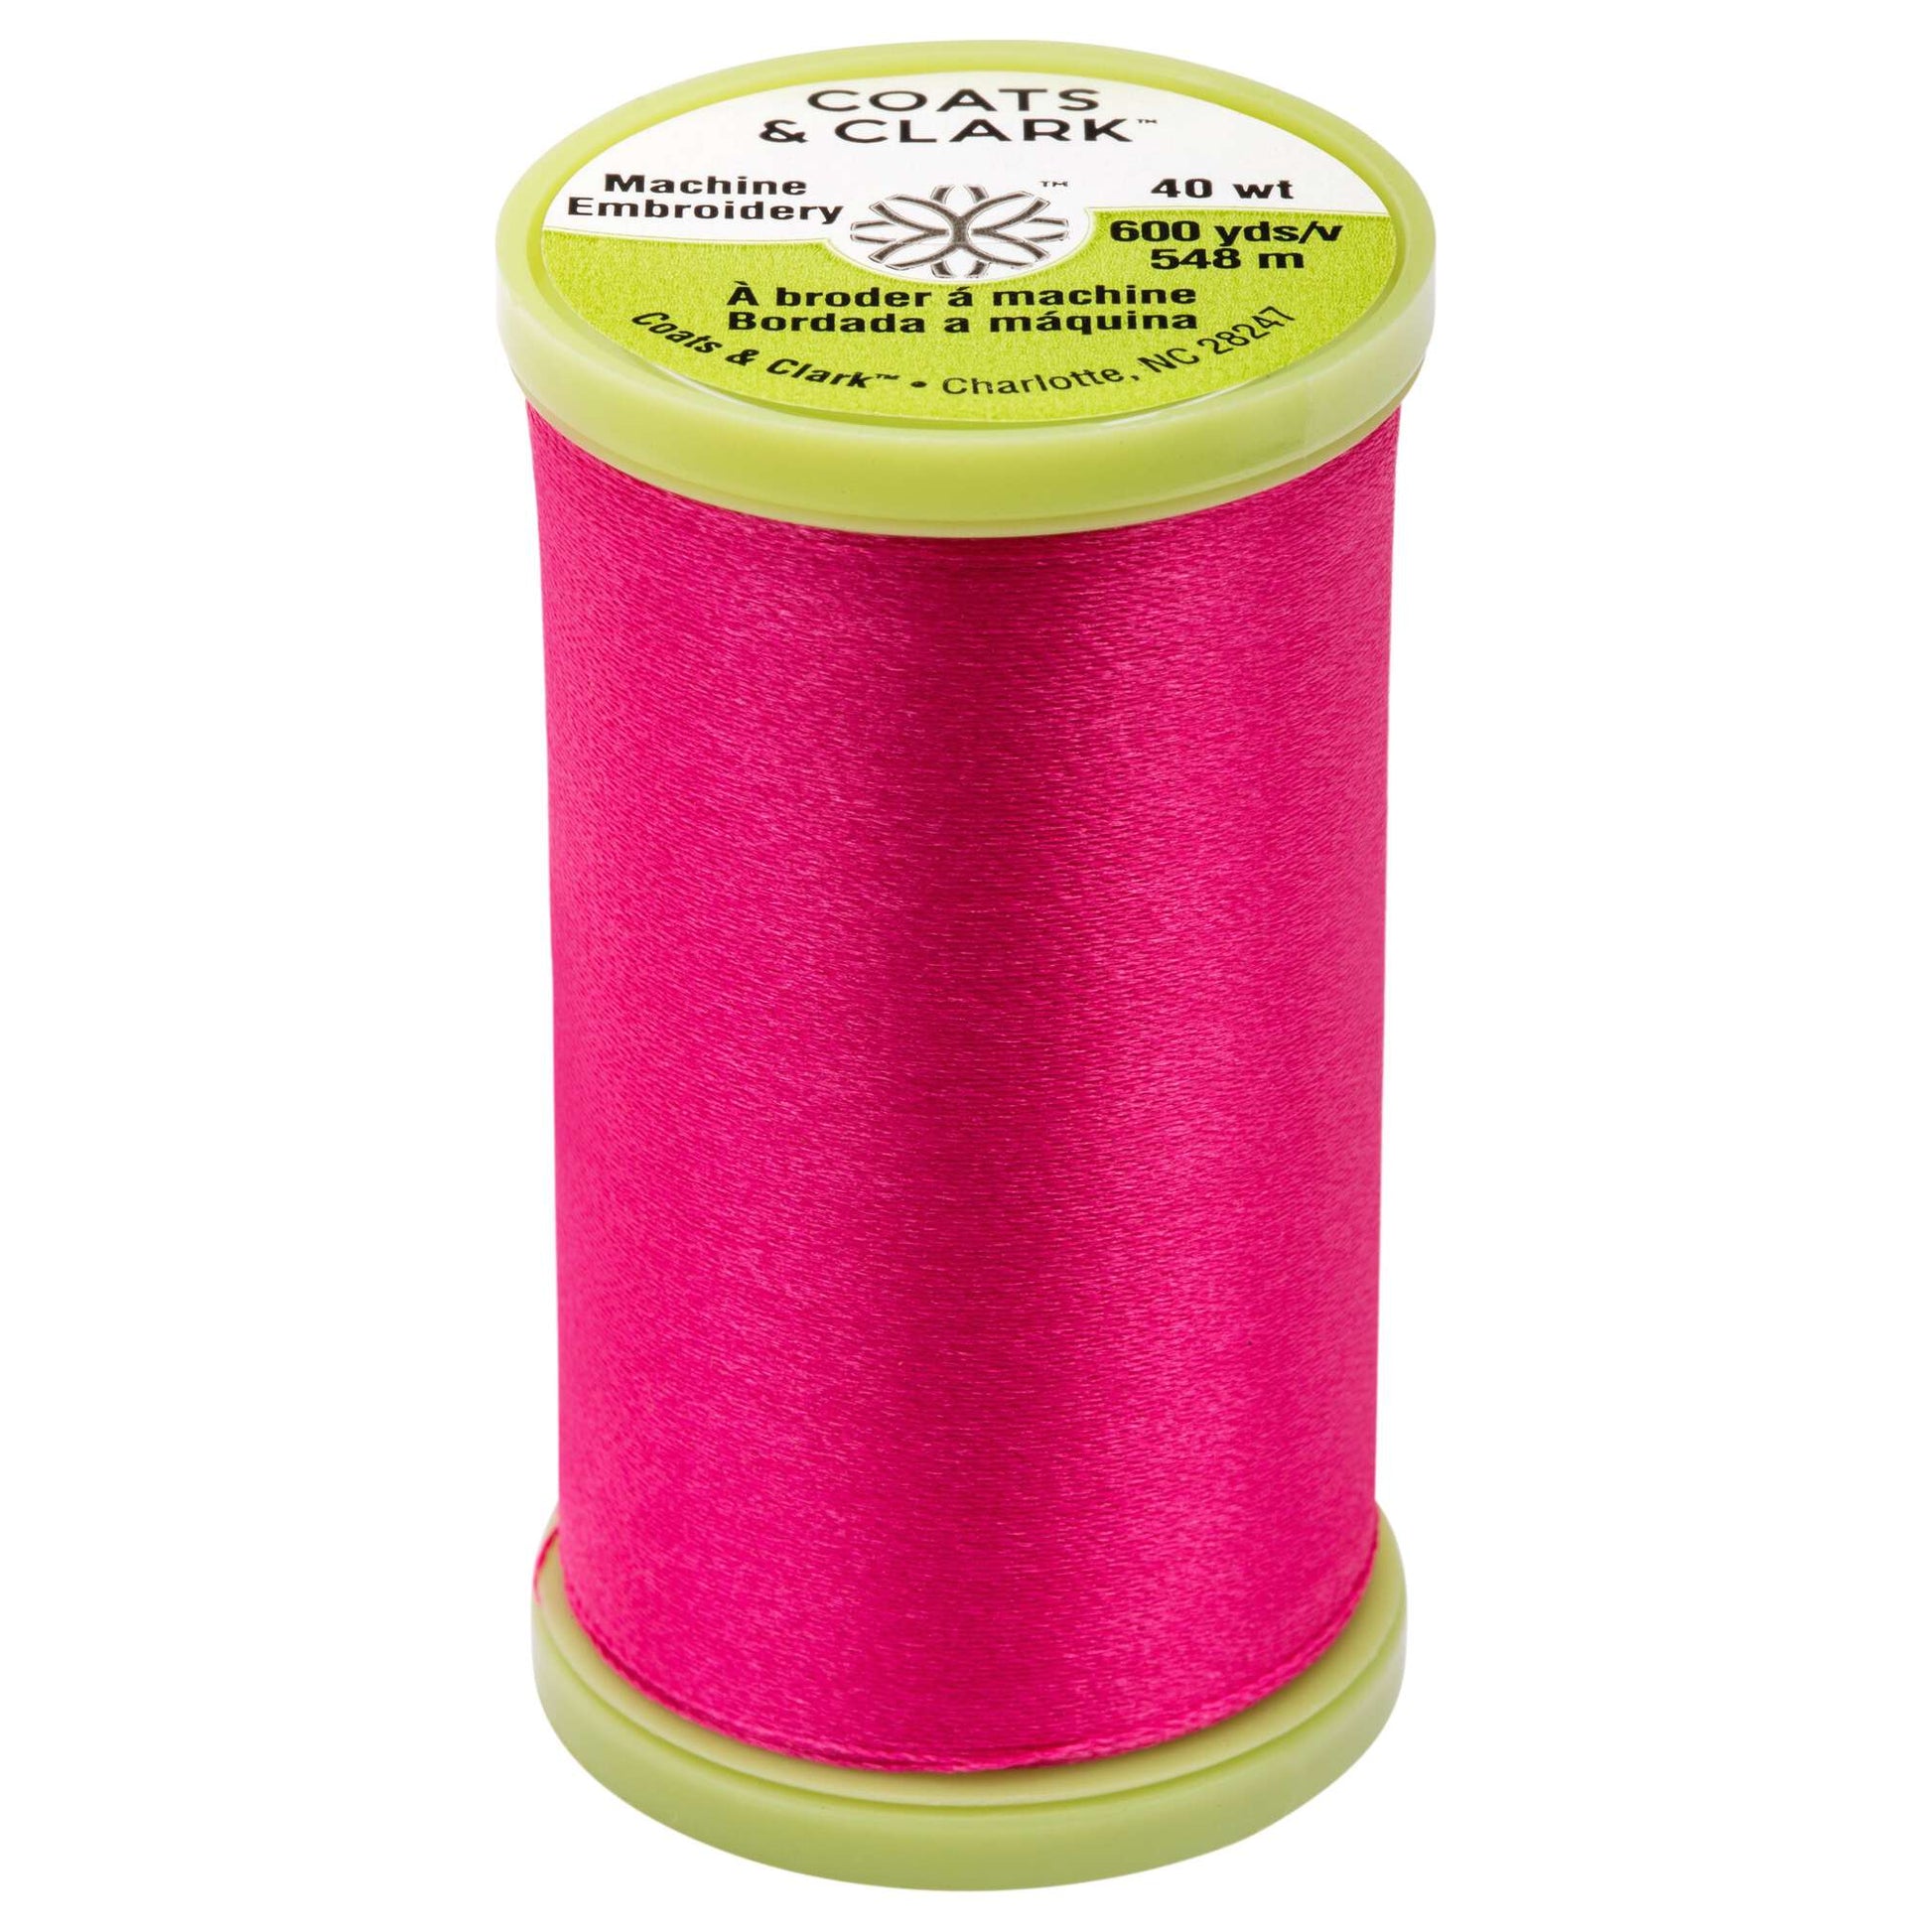 Coats & Clark Machine Embroidery Thread (600 Yards)